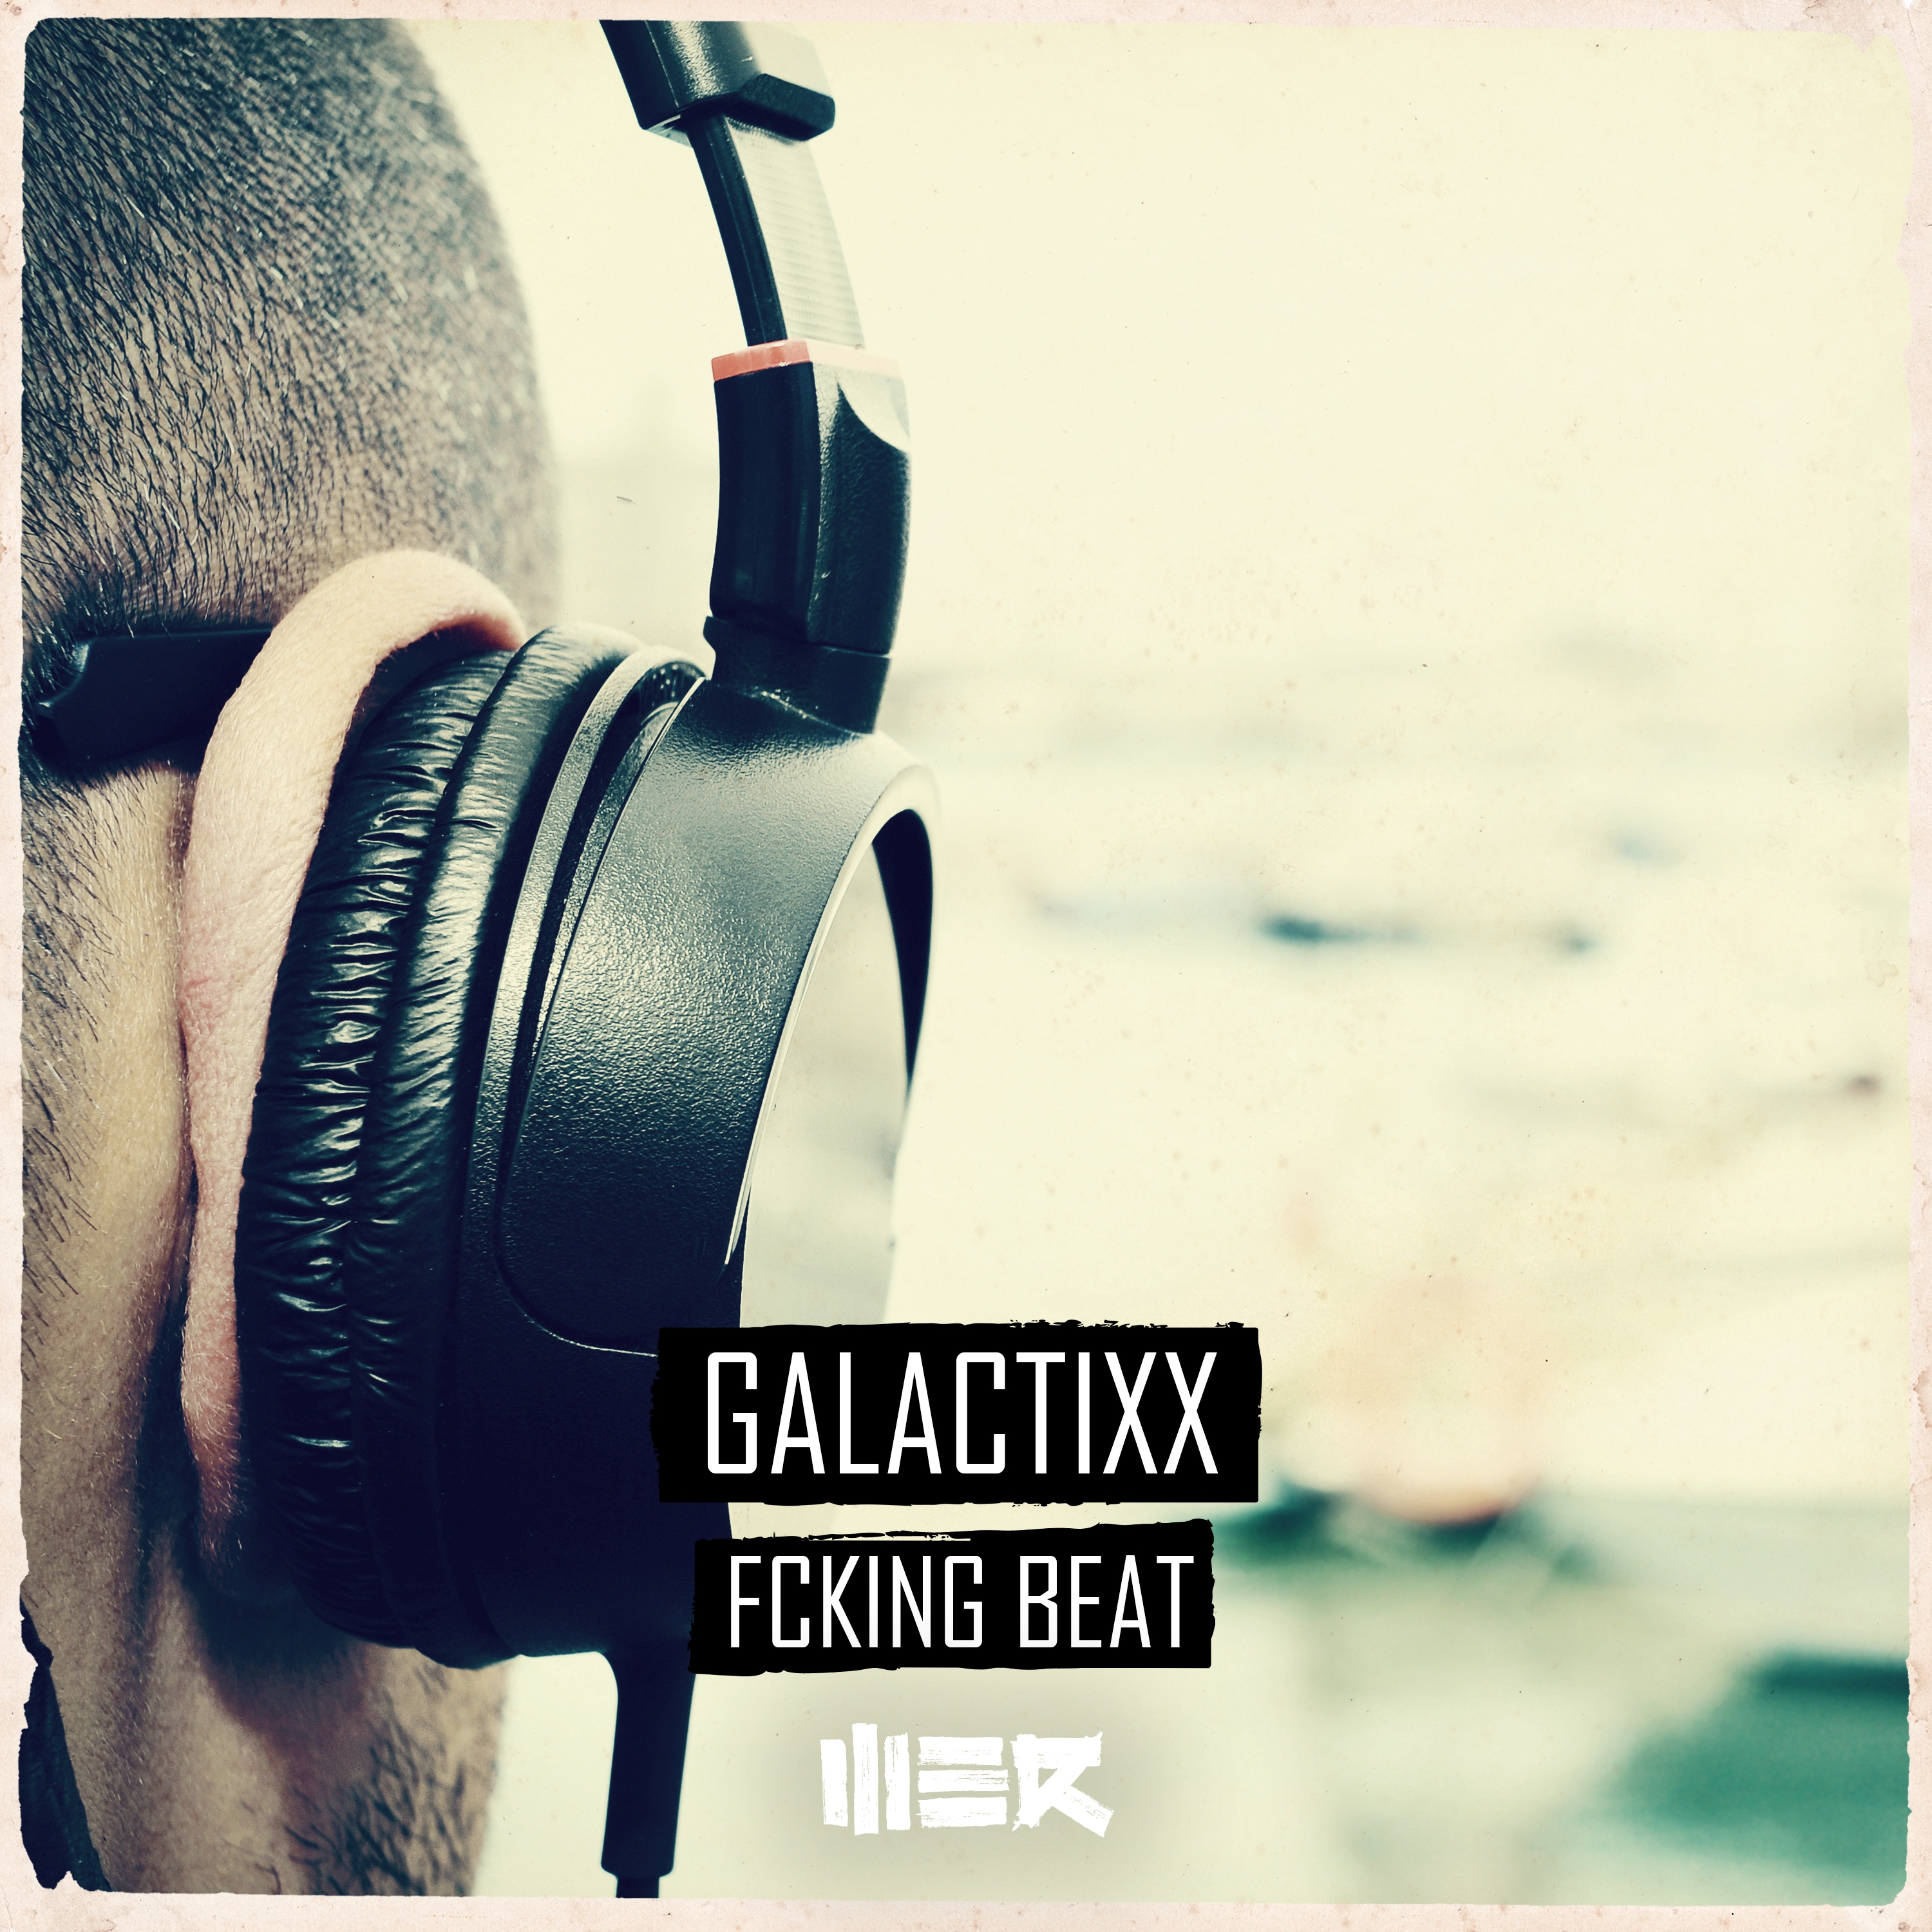 Музыка New Beat. Just r музыка. Album Art зарубежка fcking vet. B Front & Galactixx - you don't know Extended Mix. Песня new music